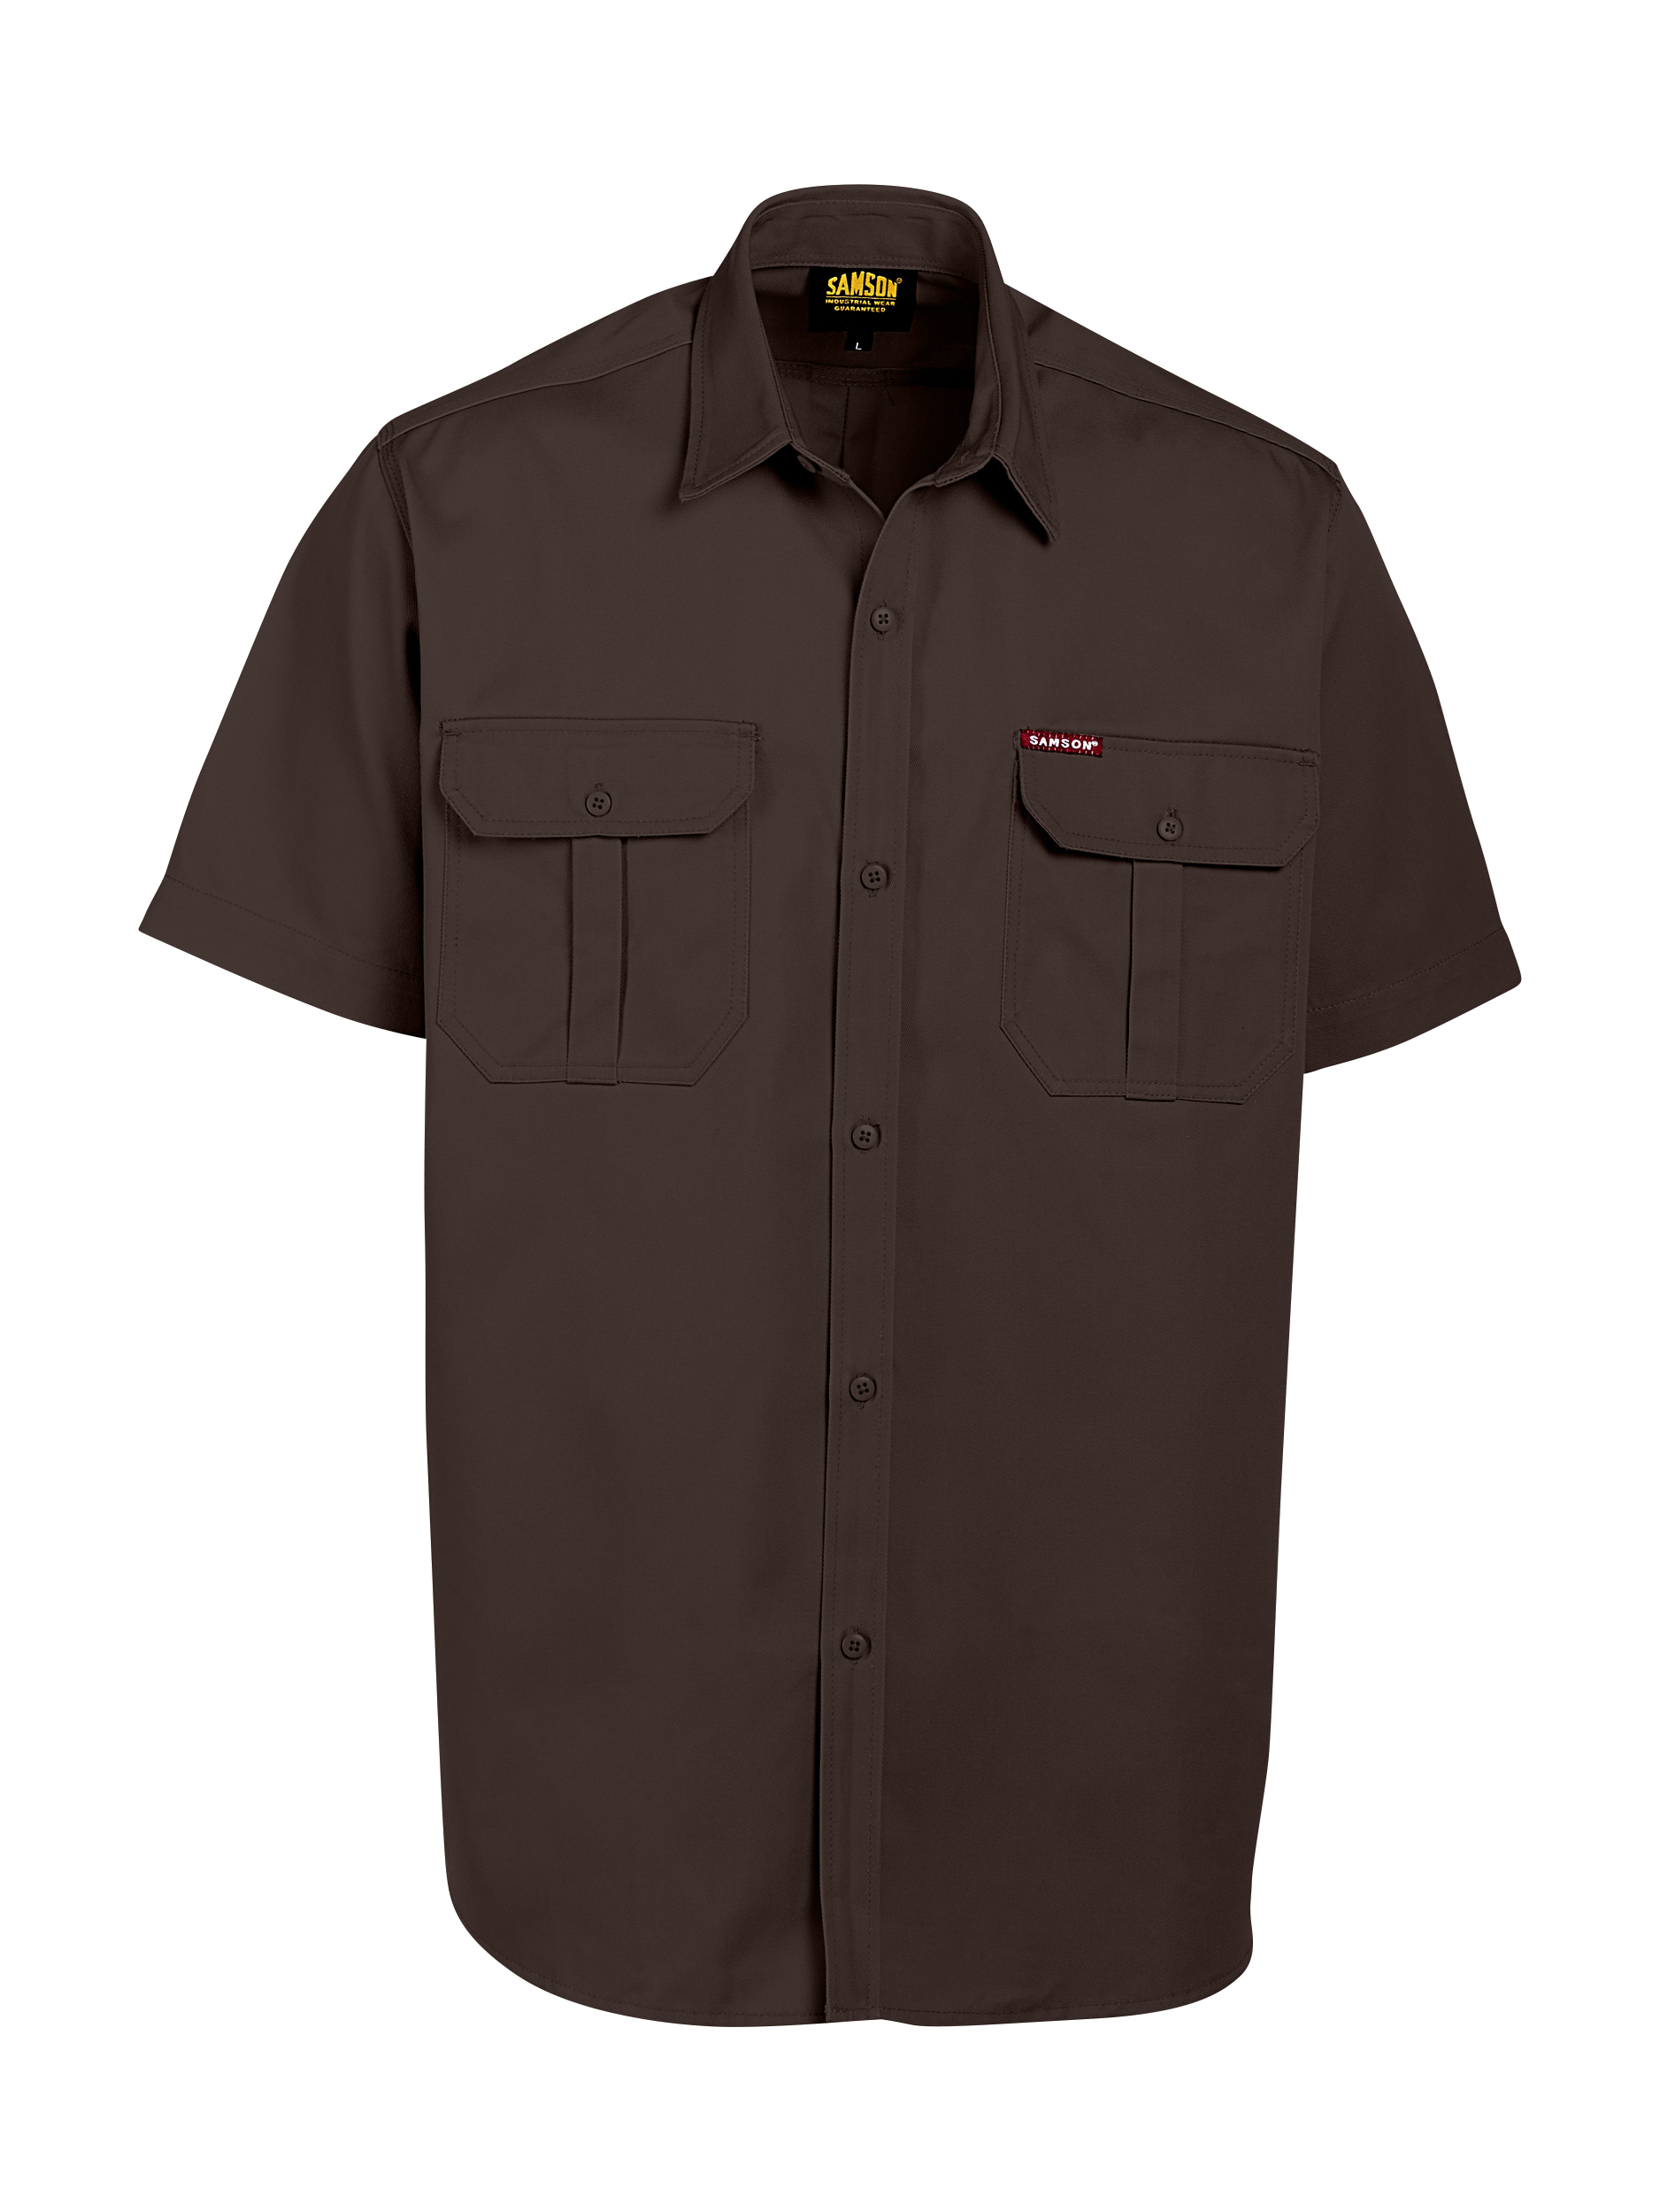 Samson - Workwear - Mens Short Sleeve Workwear Shirt